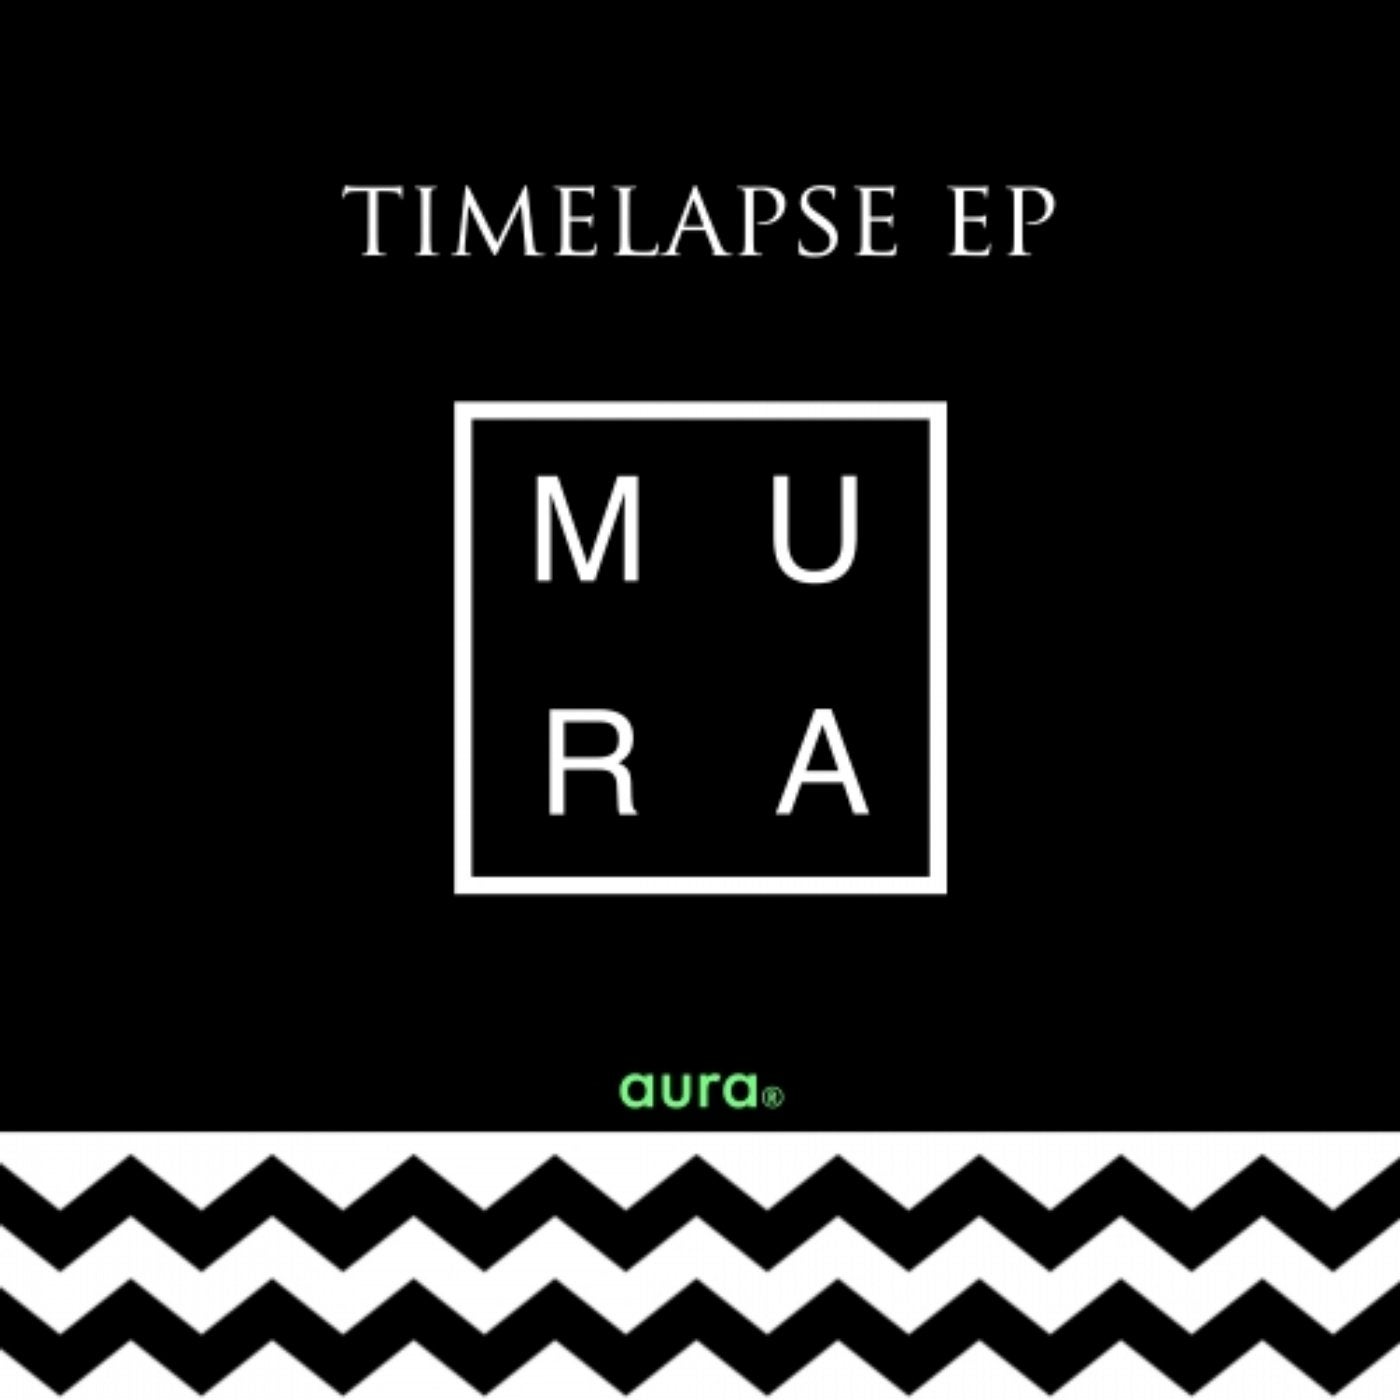 Timelapse EP